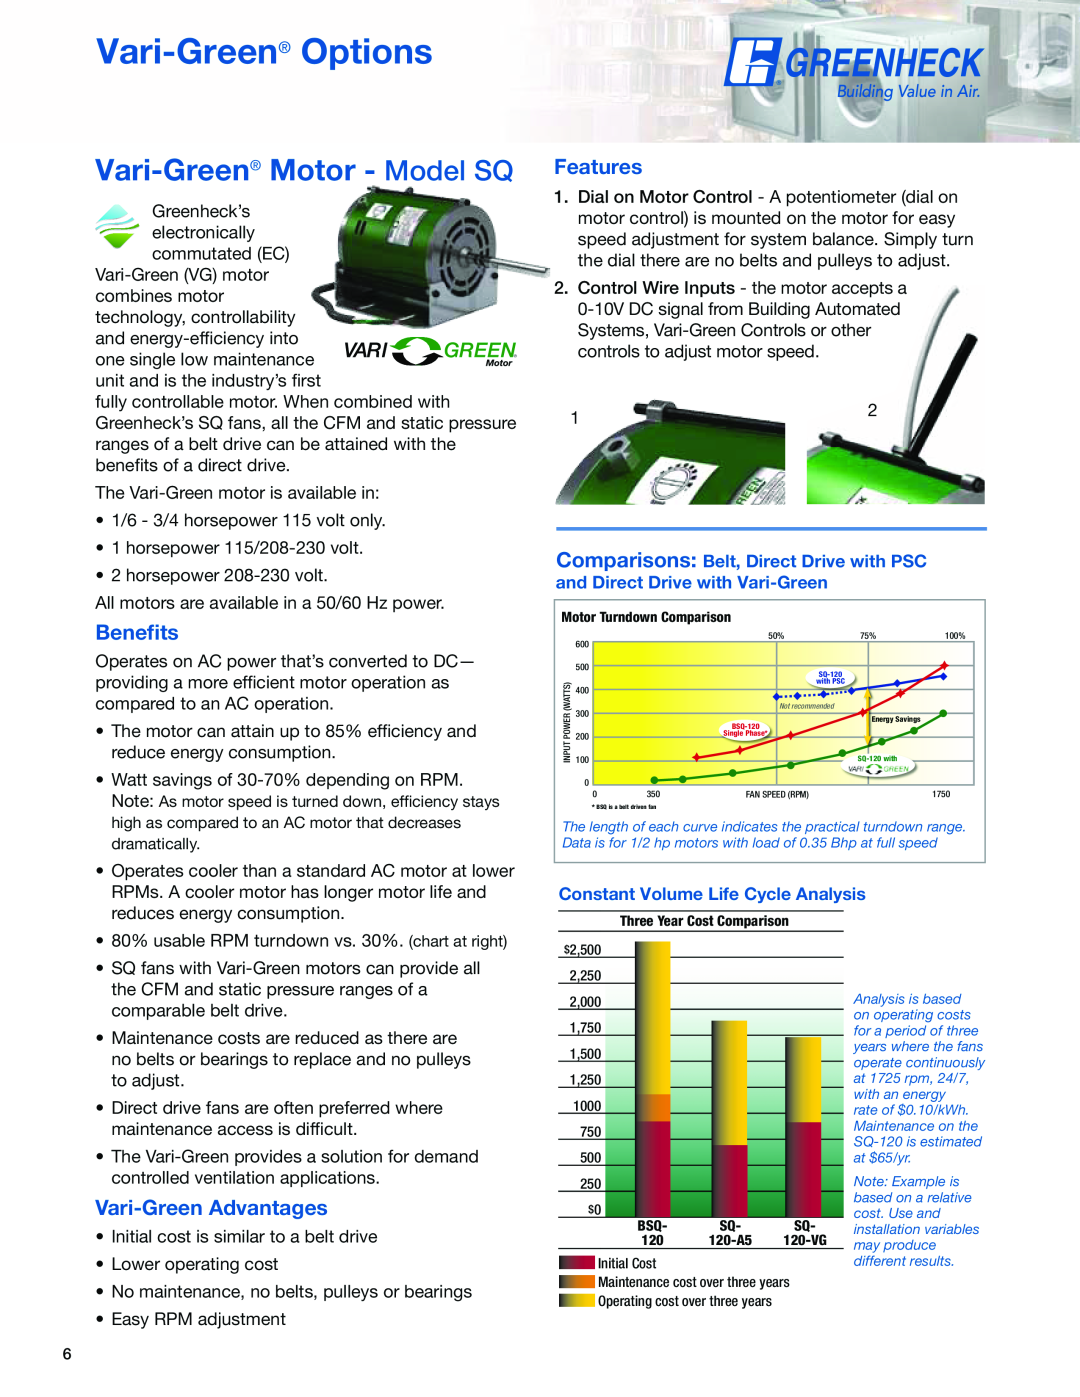 Greenheck Fan SQ/BSQ manual Vari-Green Options, Vari-Green Motor - Model SQ, Constant Volume Life Cycle Analysis 